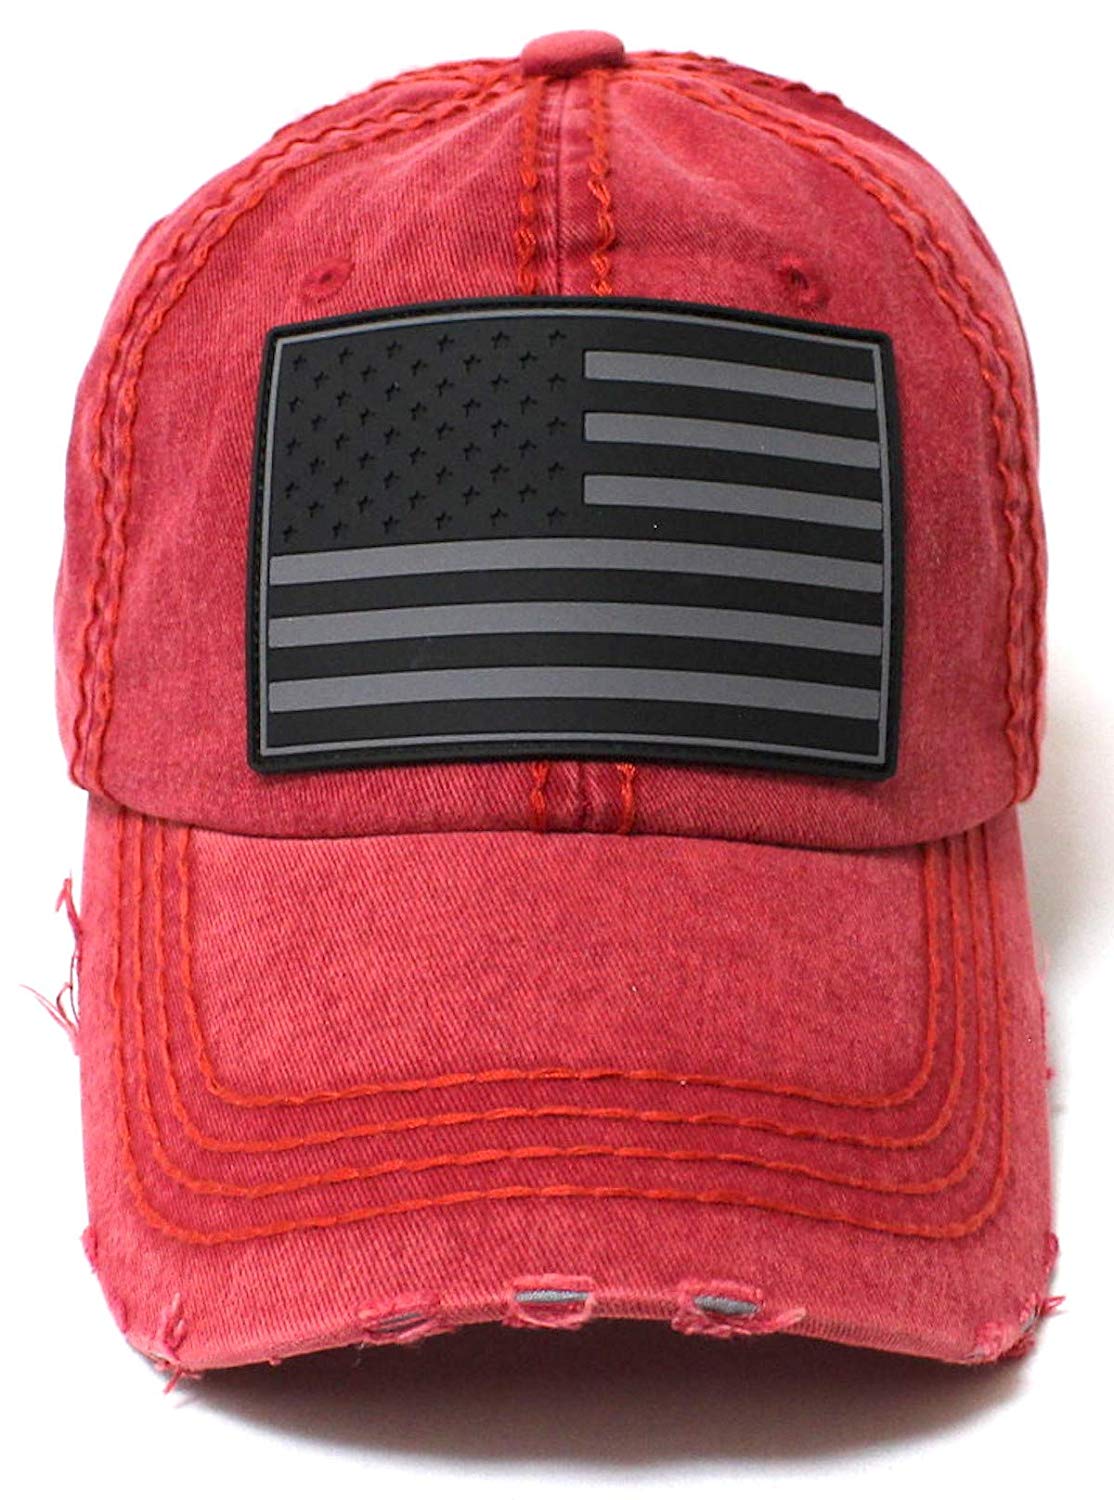 CAPS 'N VINTAGE Washed Red/Black American Flag Adjustable Baseball Hat - Caps 'N Vintage 